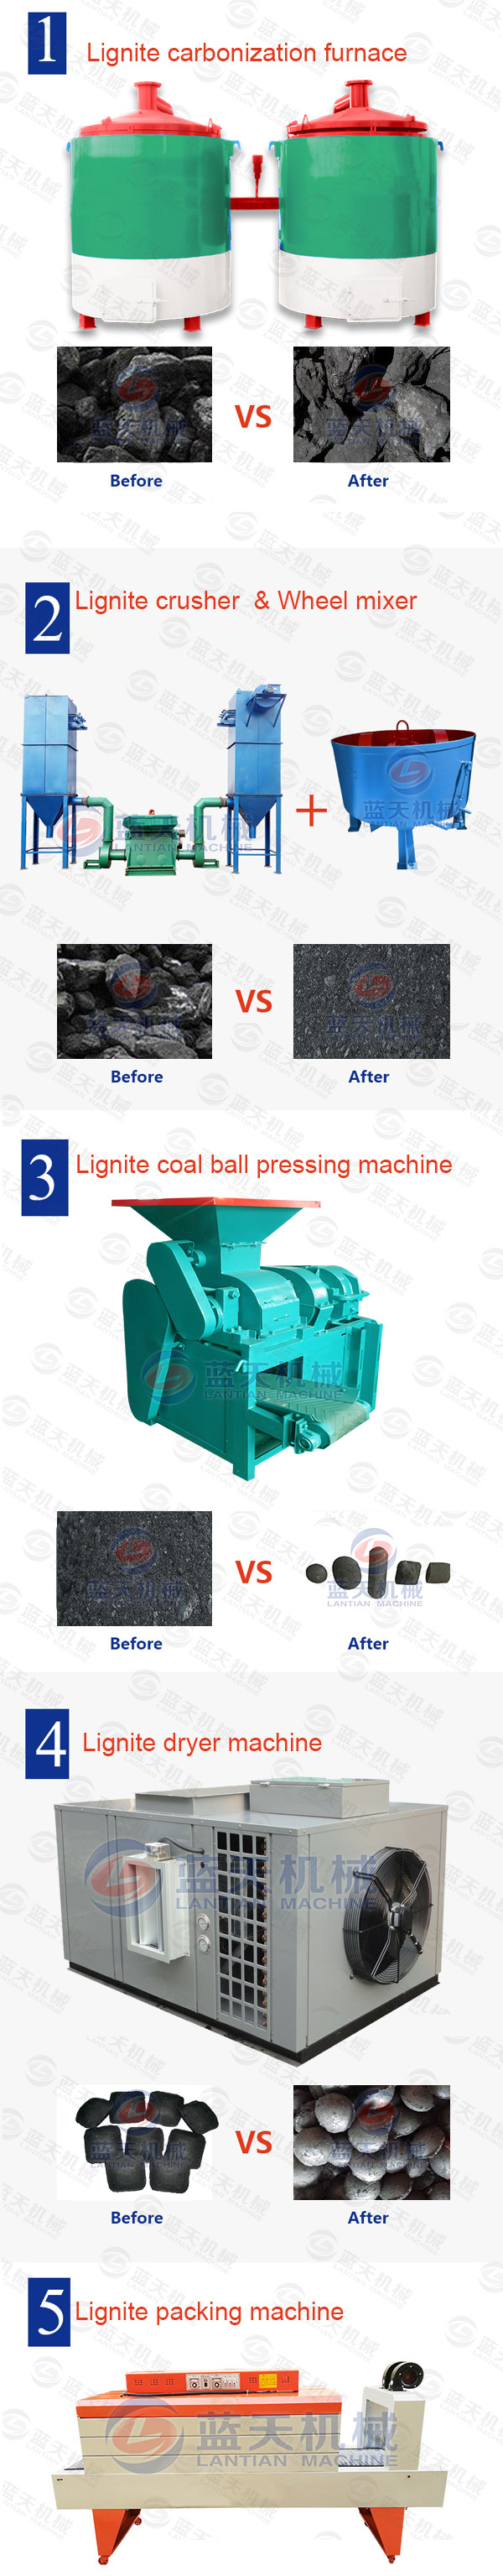 Lignite Coal Ball Pressing Machine